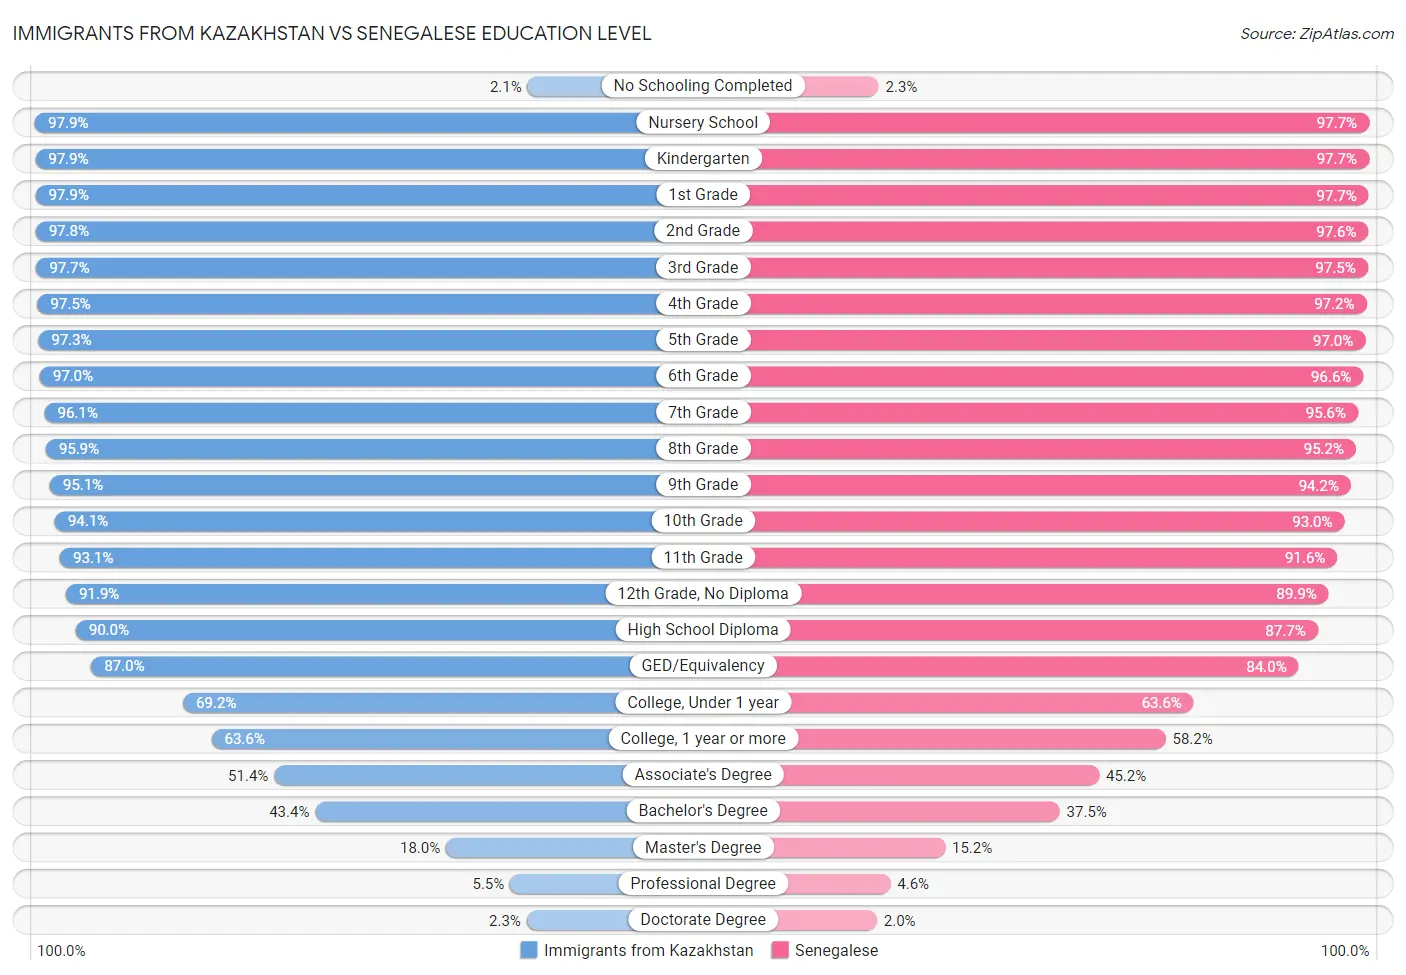 Immigrants from Kazakhstan vs Senegalese Education Level